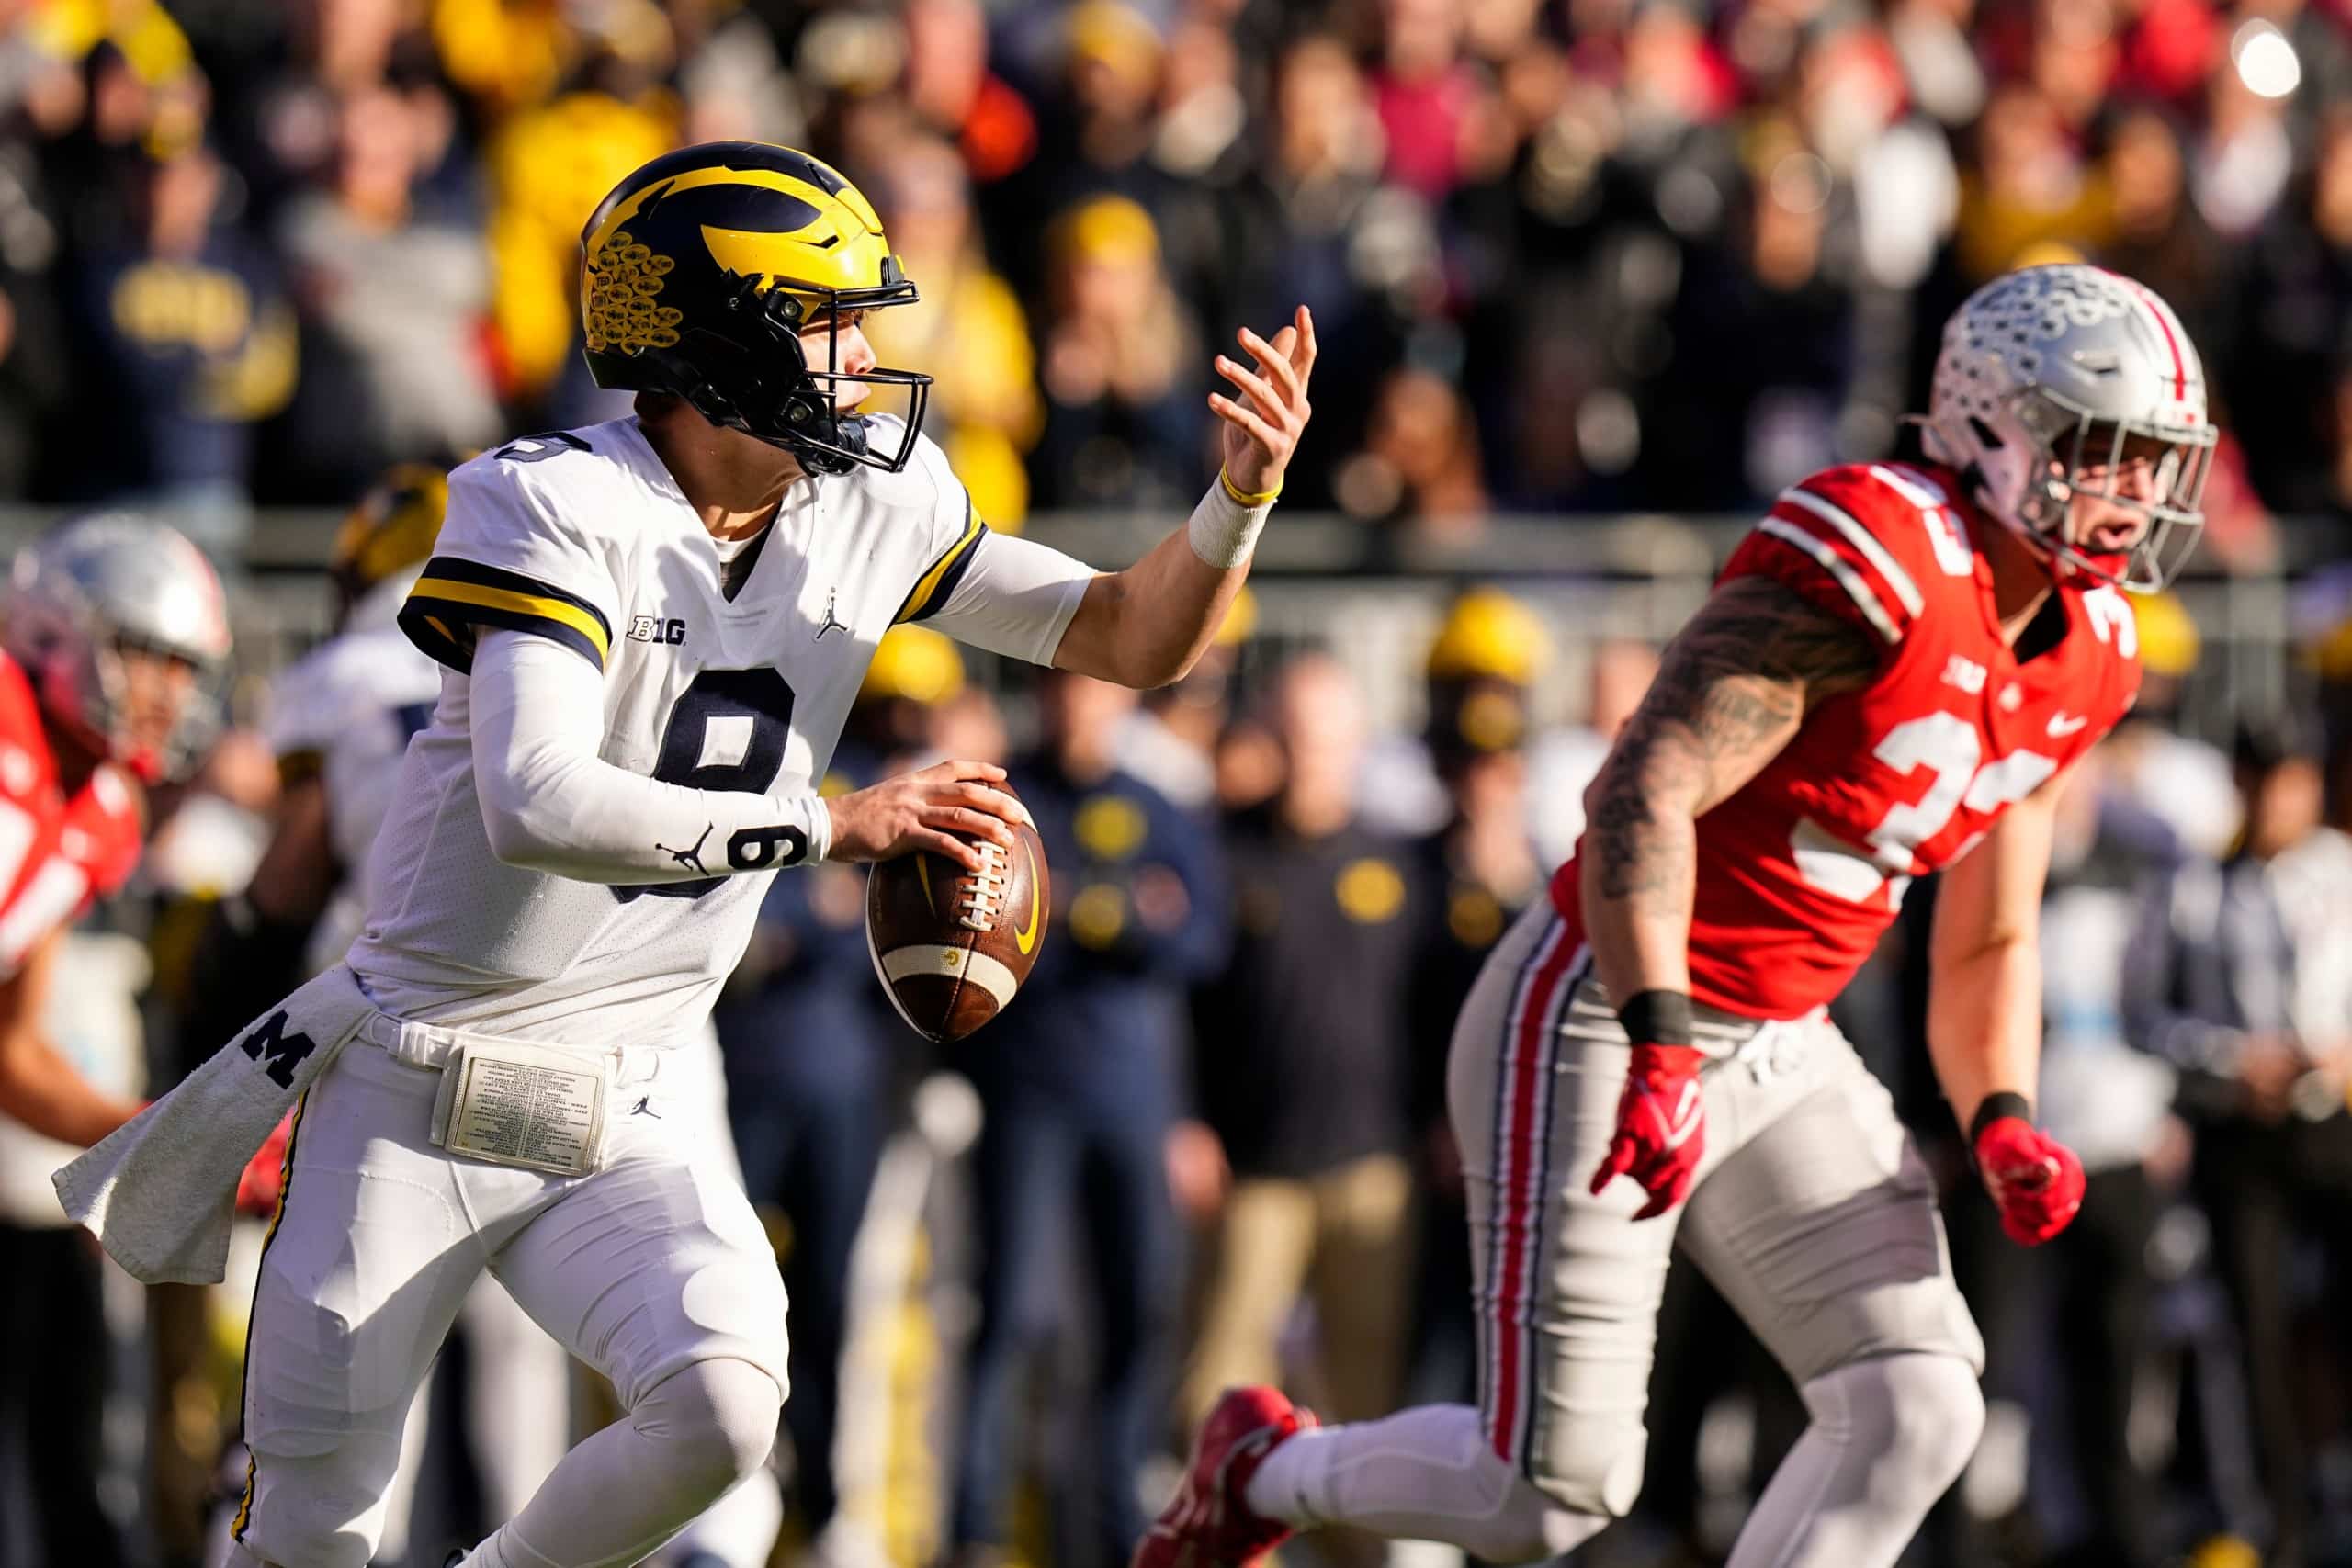 University of Michigan quarterback JJ McCarthy scrambles to complete pass against Ohio State